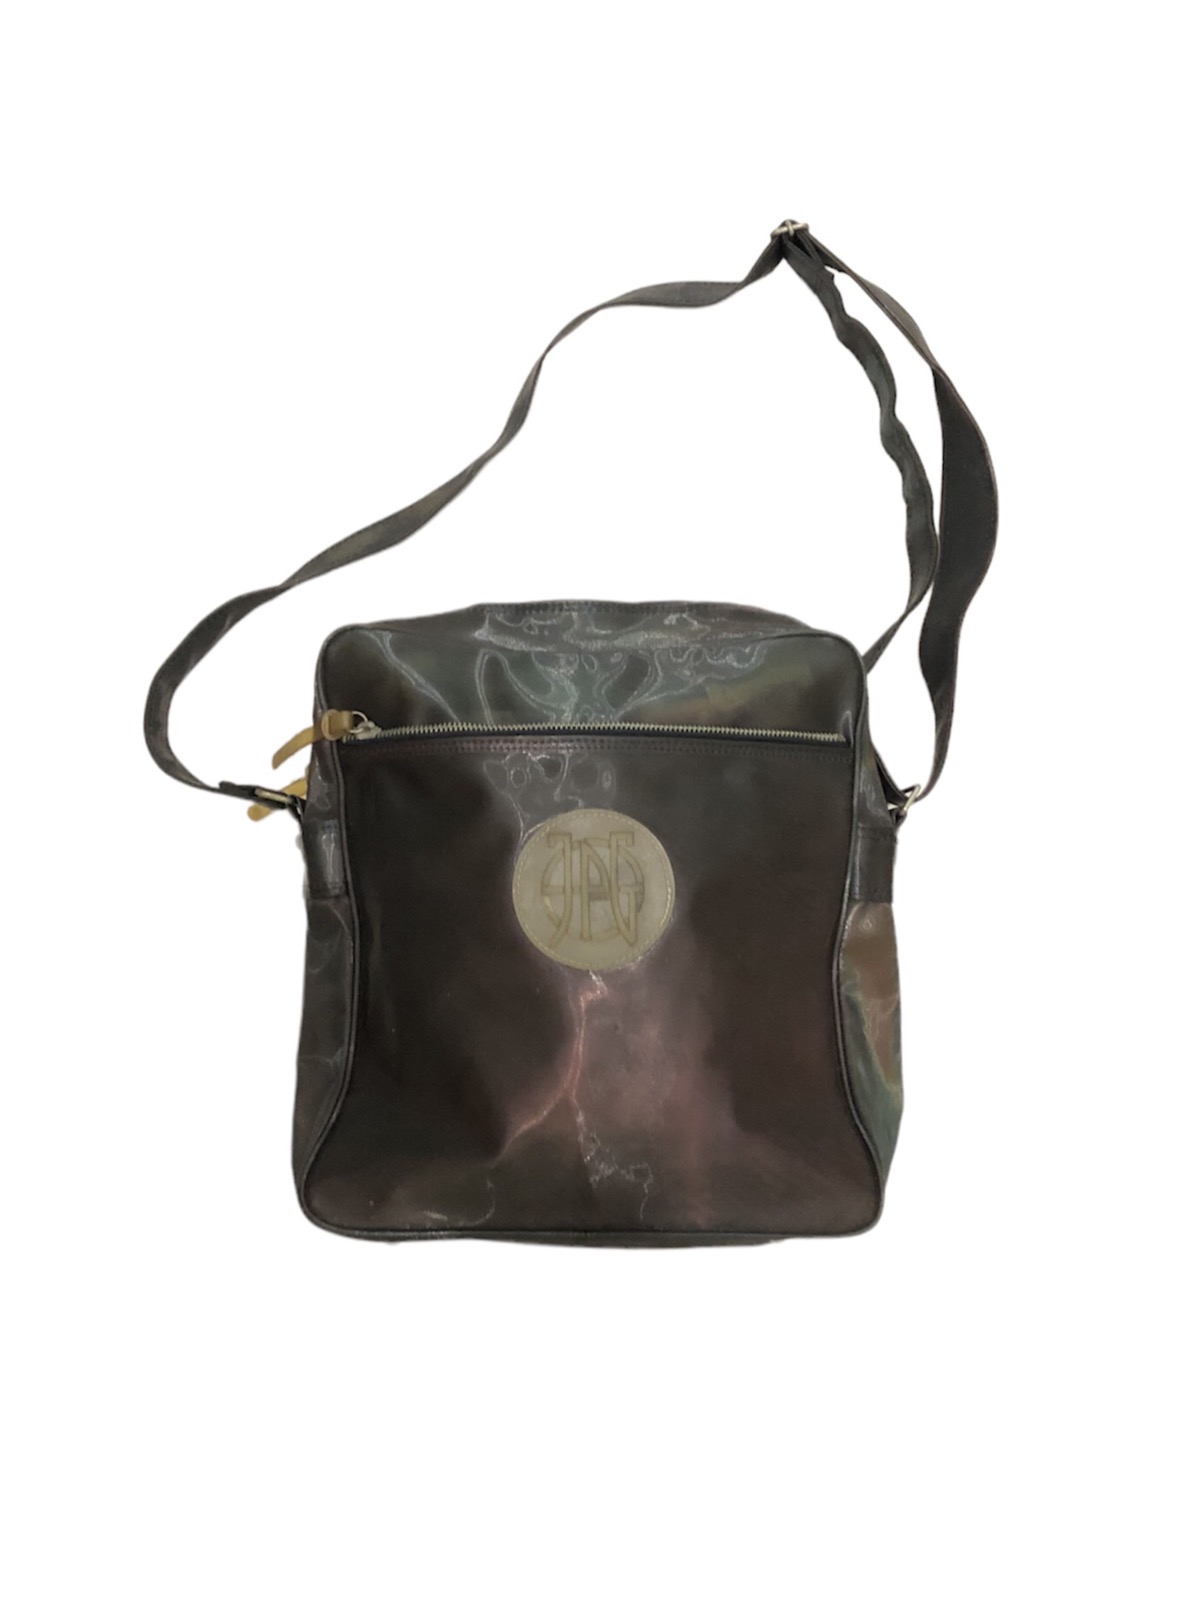 JPG Vinly sling bag - 1